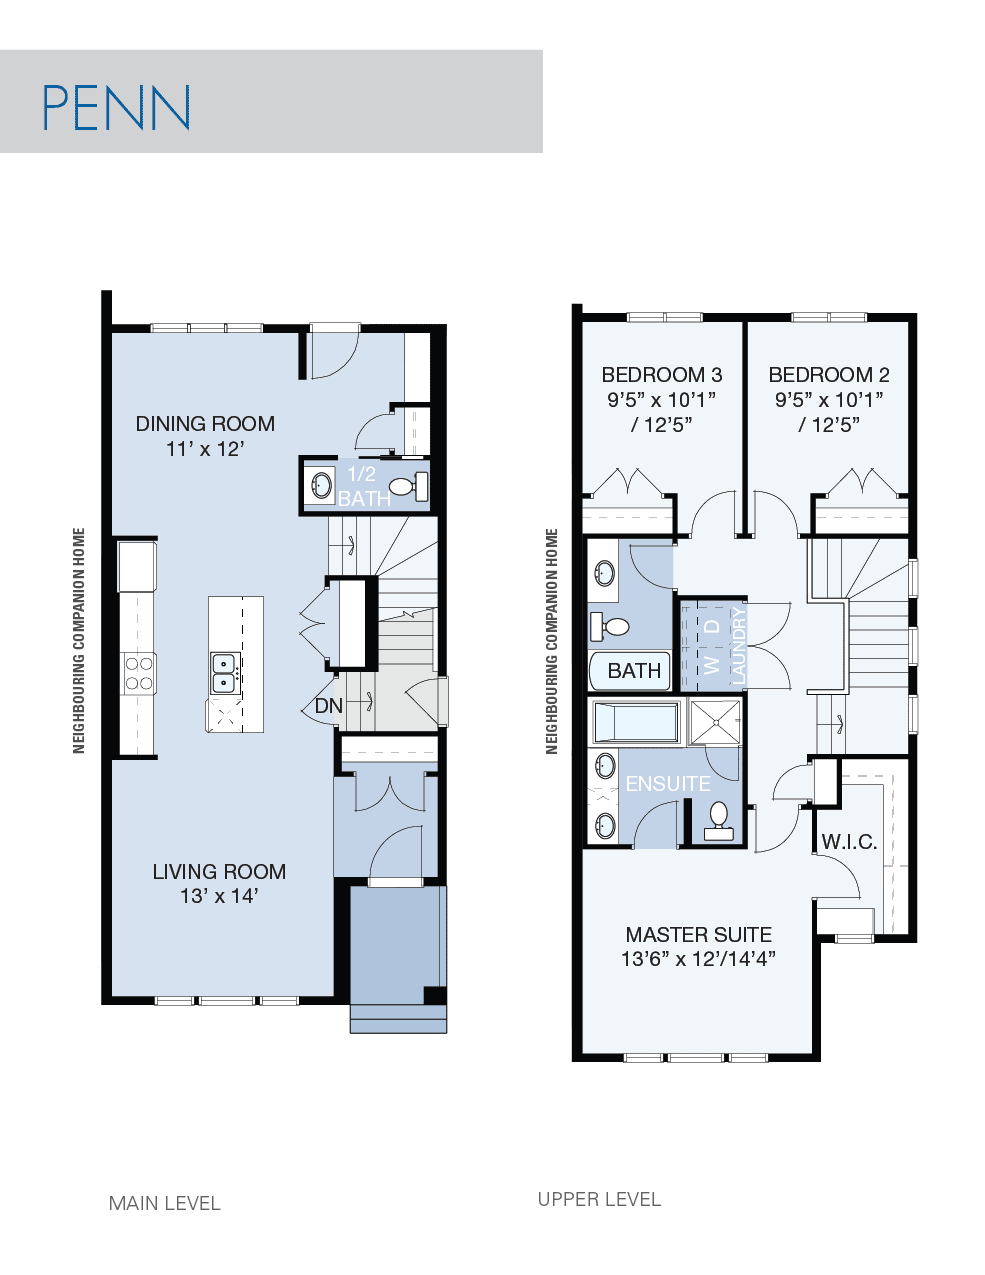 Penn floorplan